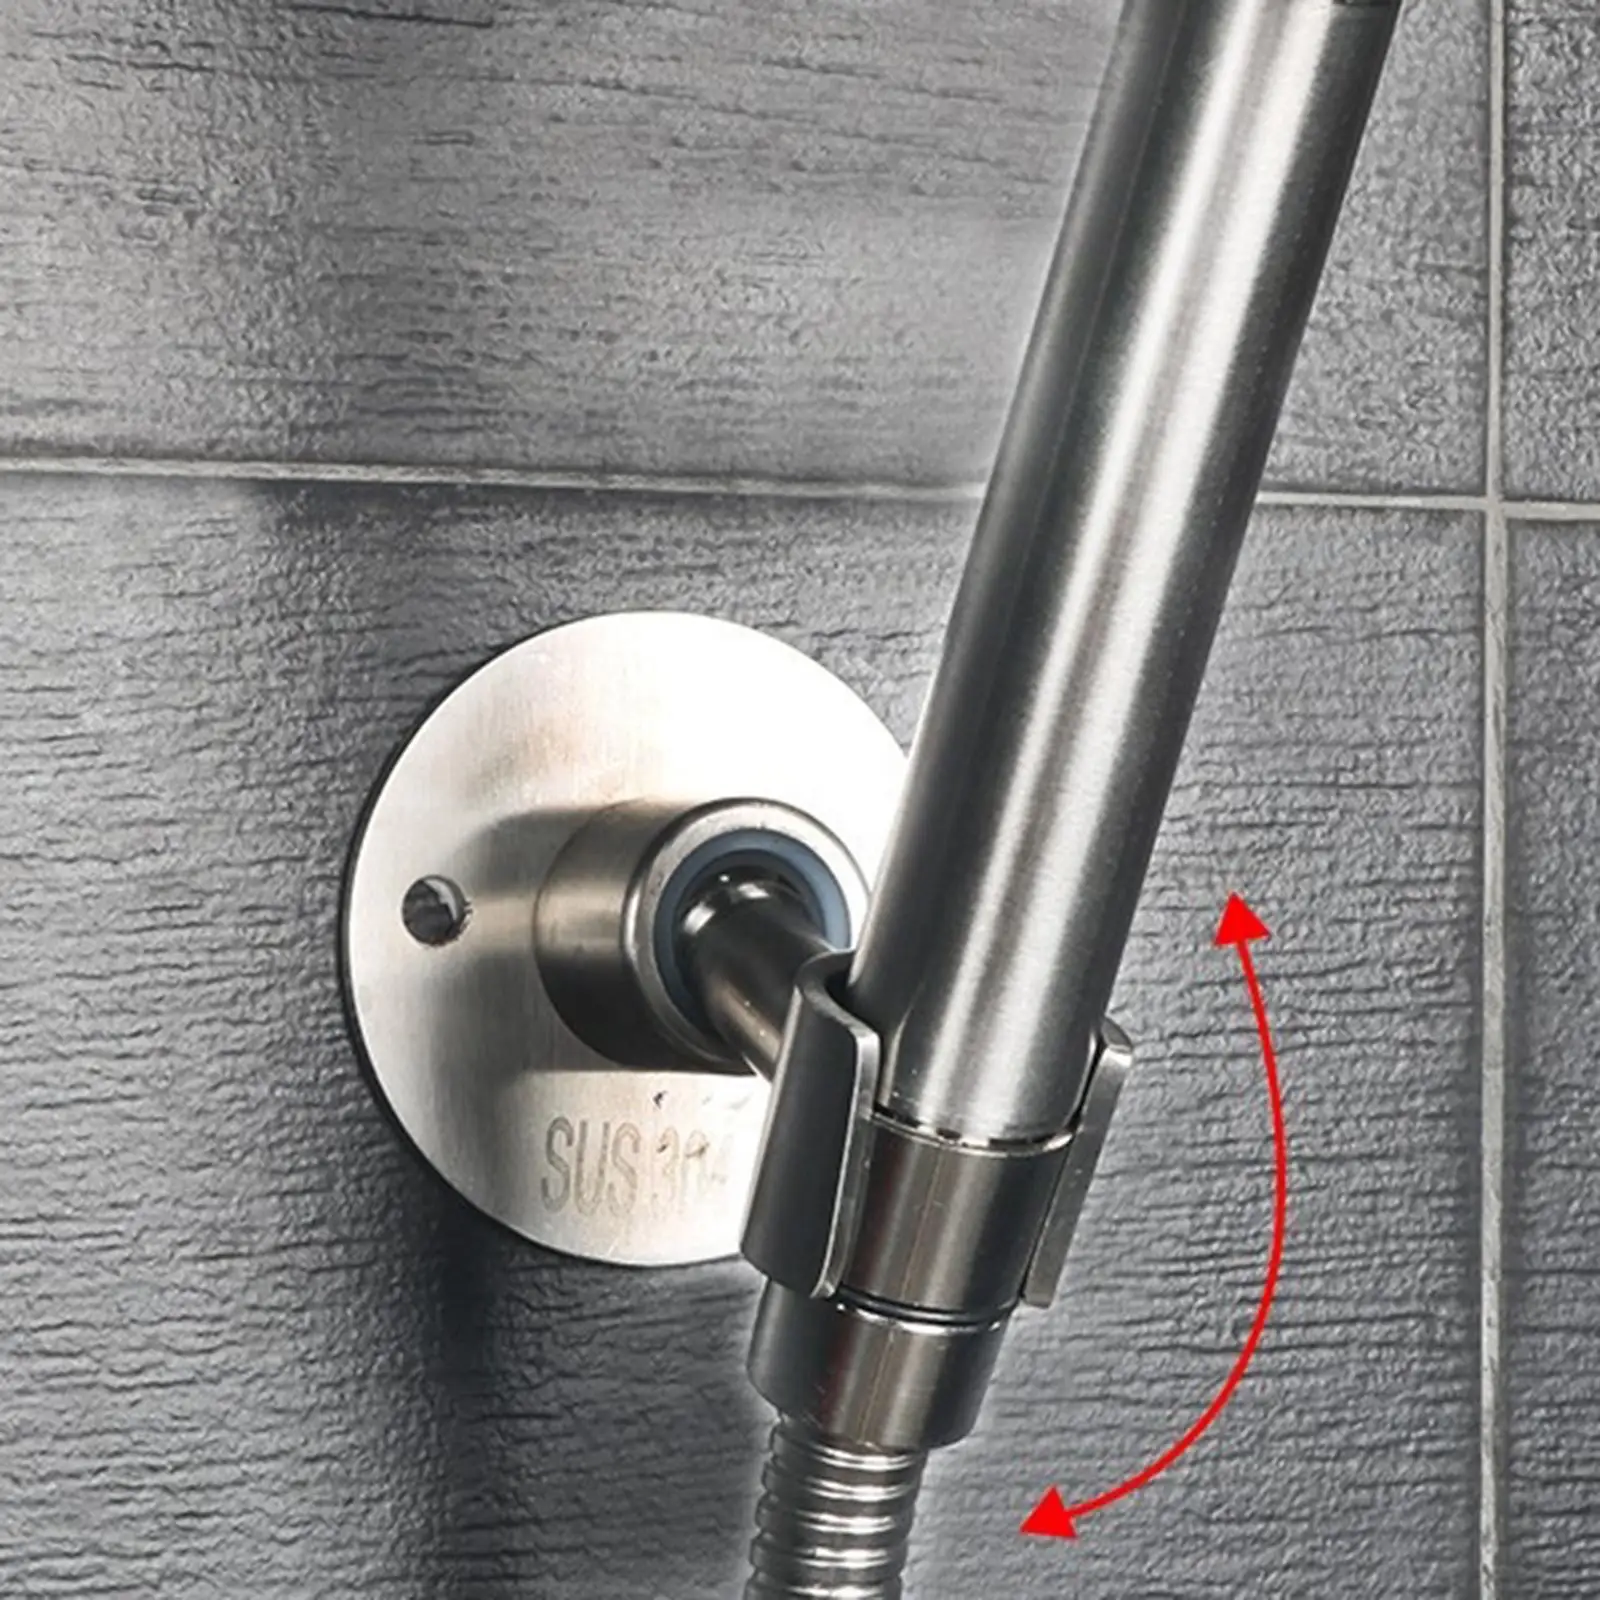 Stainless Steel Shower Spray Holder Wall Mount Shower Wand Holder for Hotel